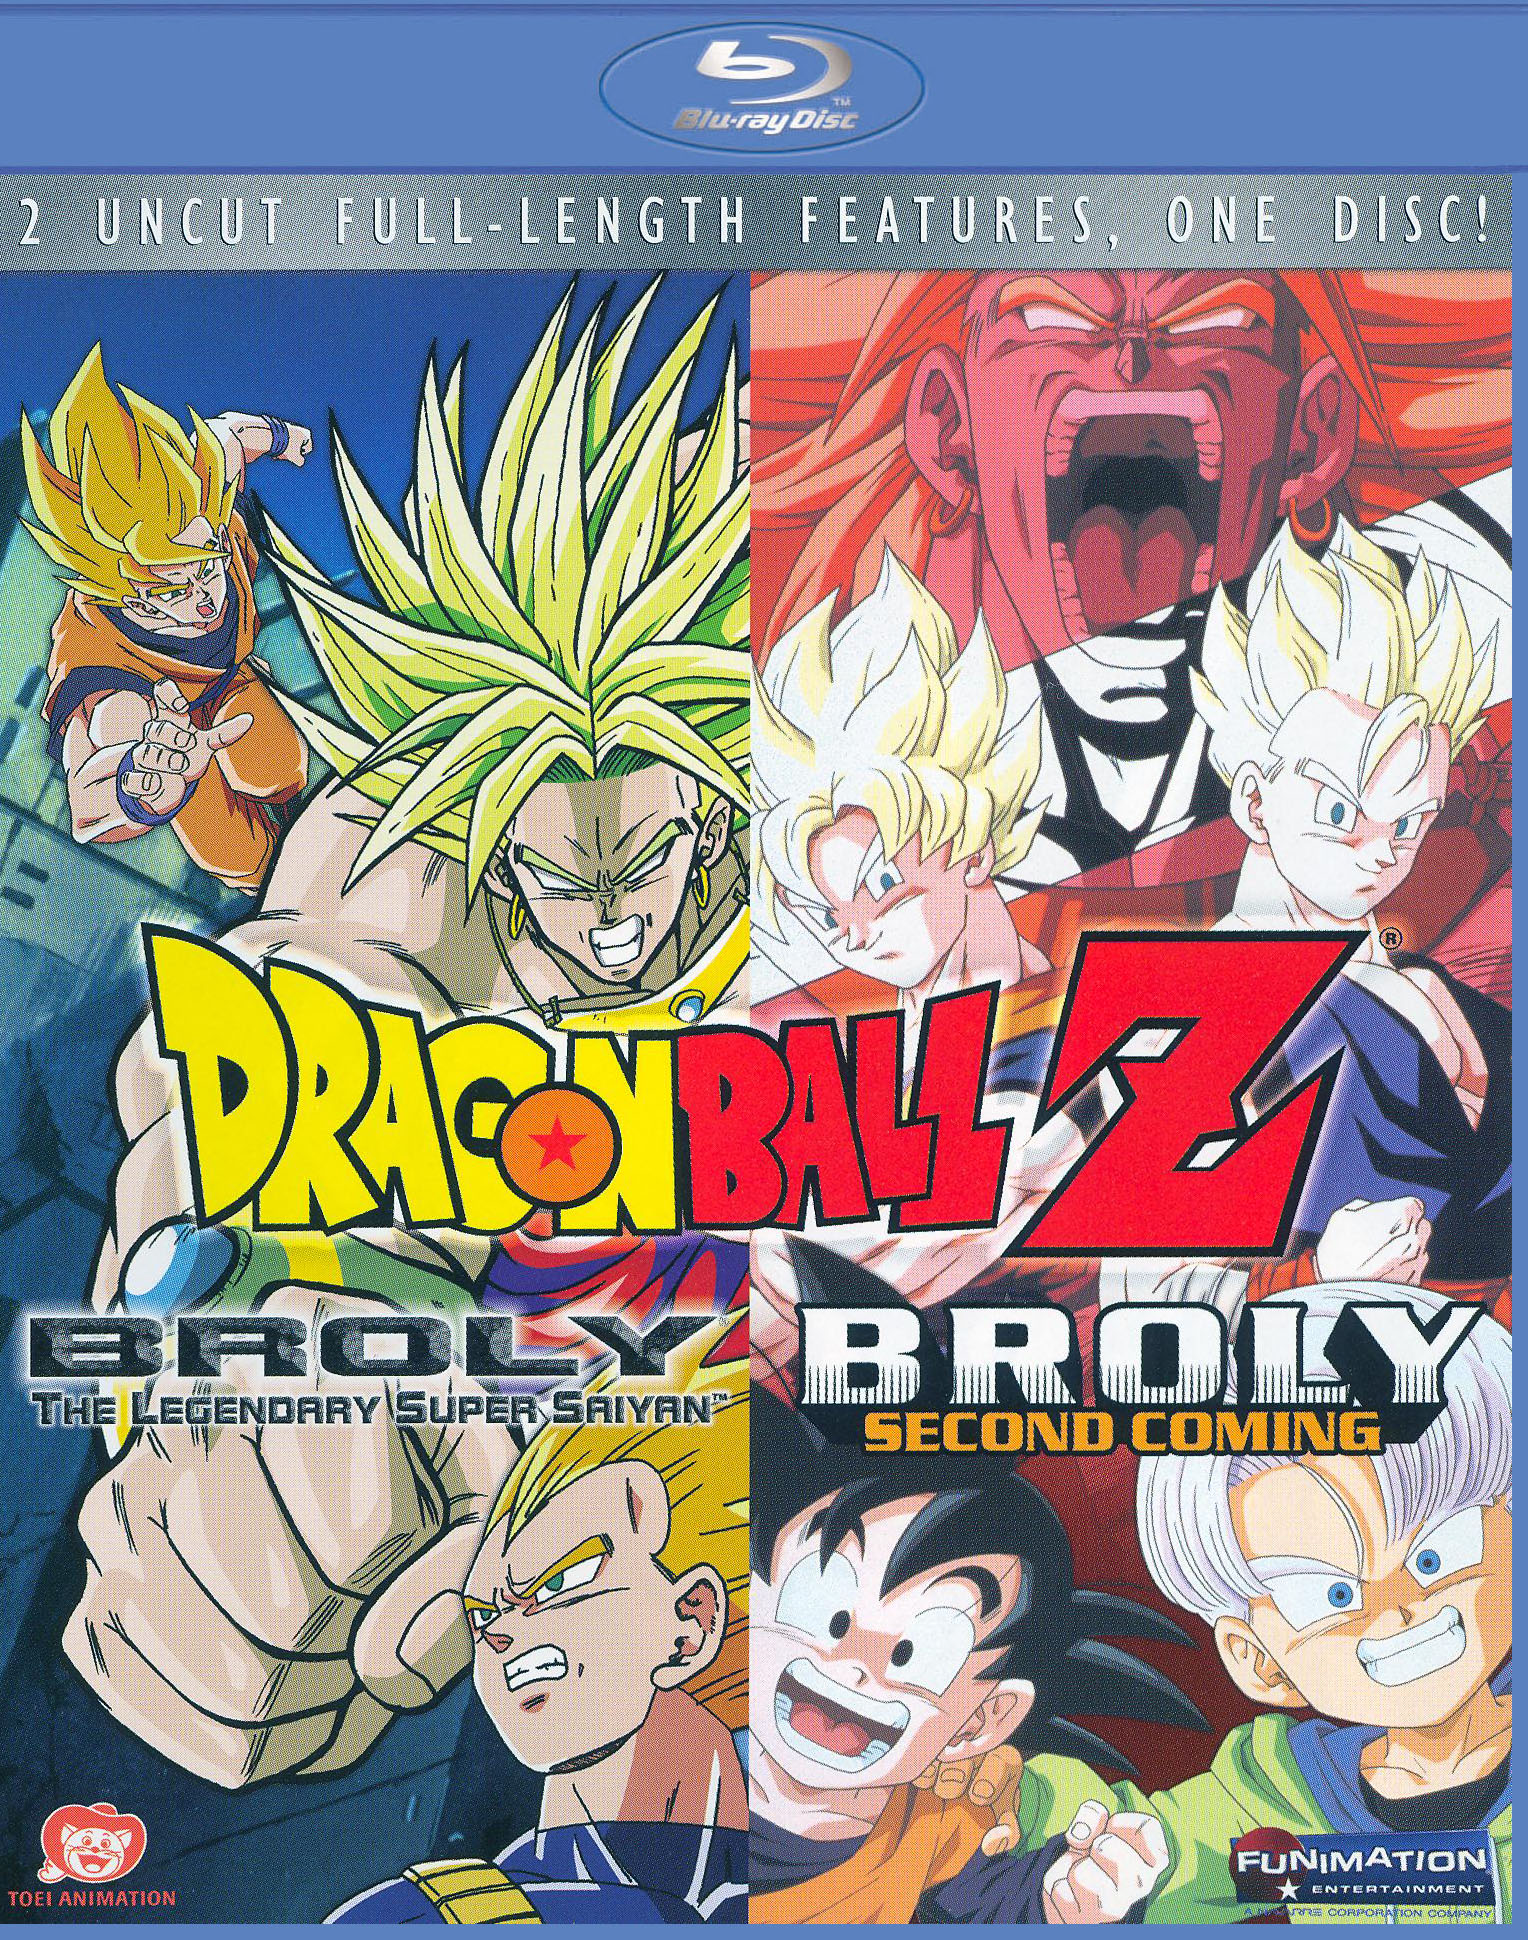 Dragon Ball Super: Broly - The Movie [Blu-ray]